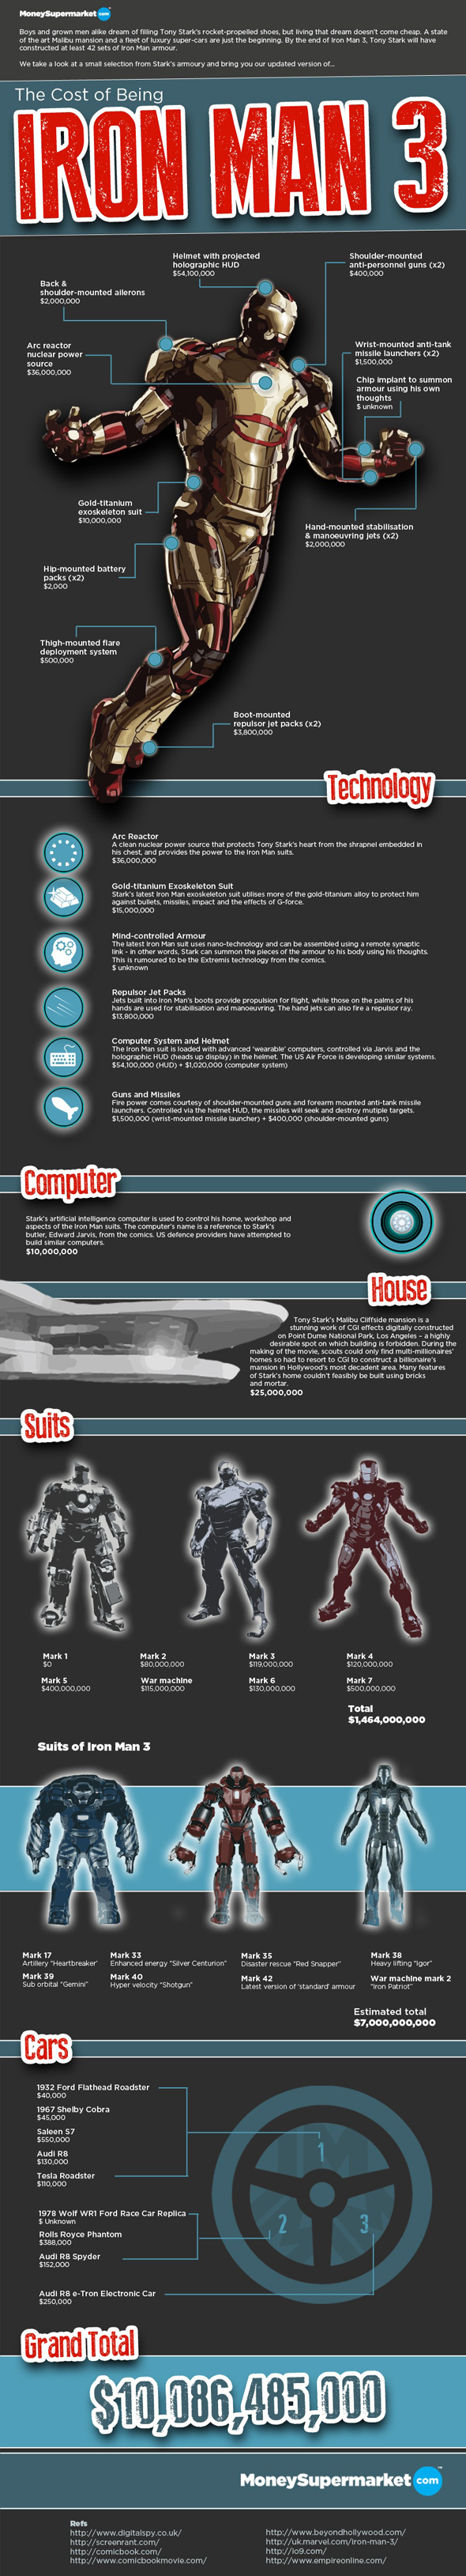 Iron Man infographic